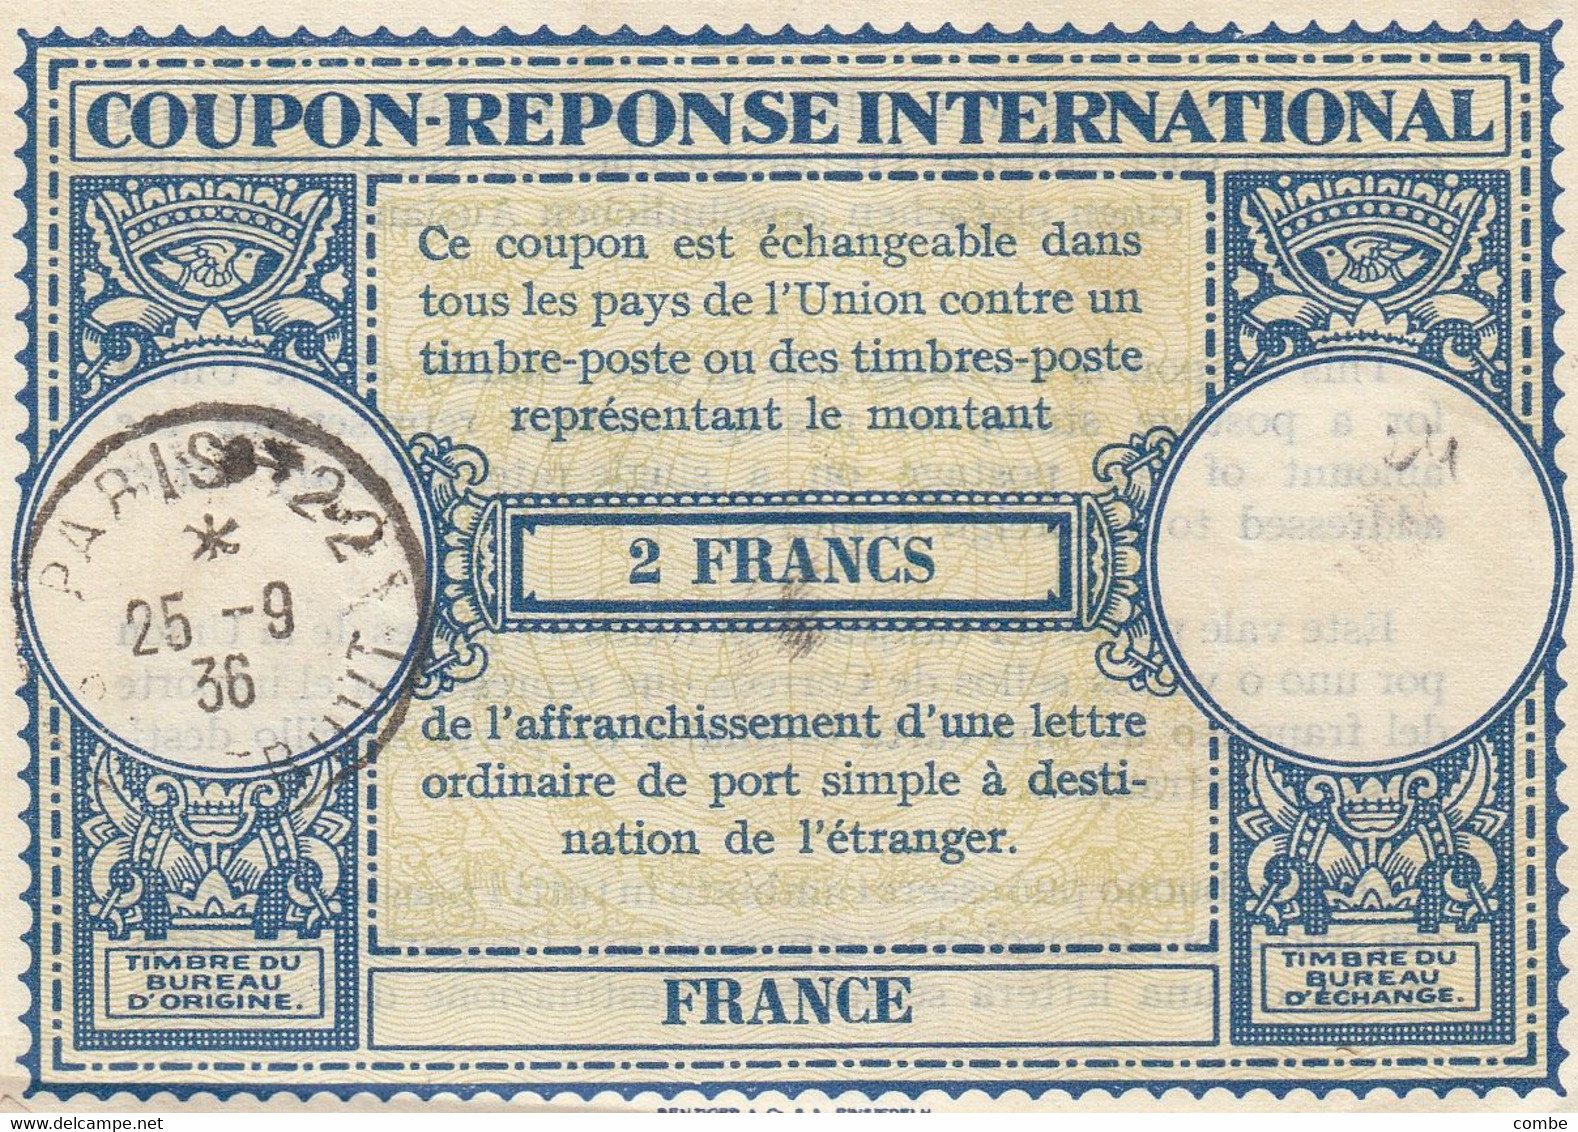 COUPON-REPONSE INTERNATIONAL. FRANCE. INTERNATIONAL REPLY. 2 FRANCS. PARIS 22 1936        /  2 - Reply Coupons